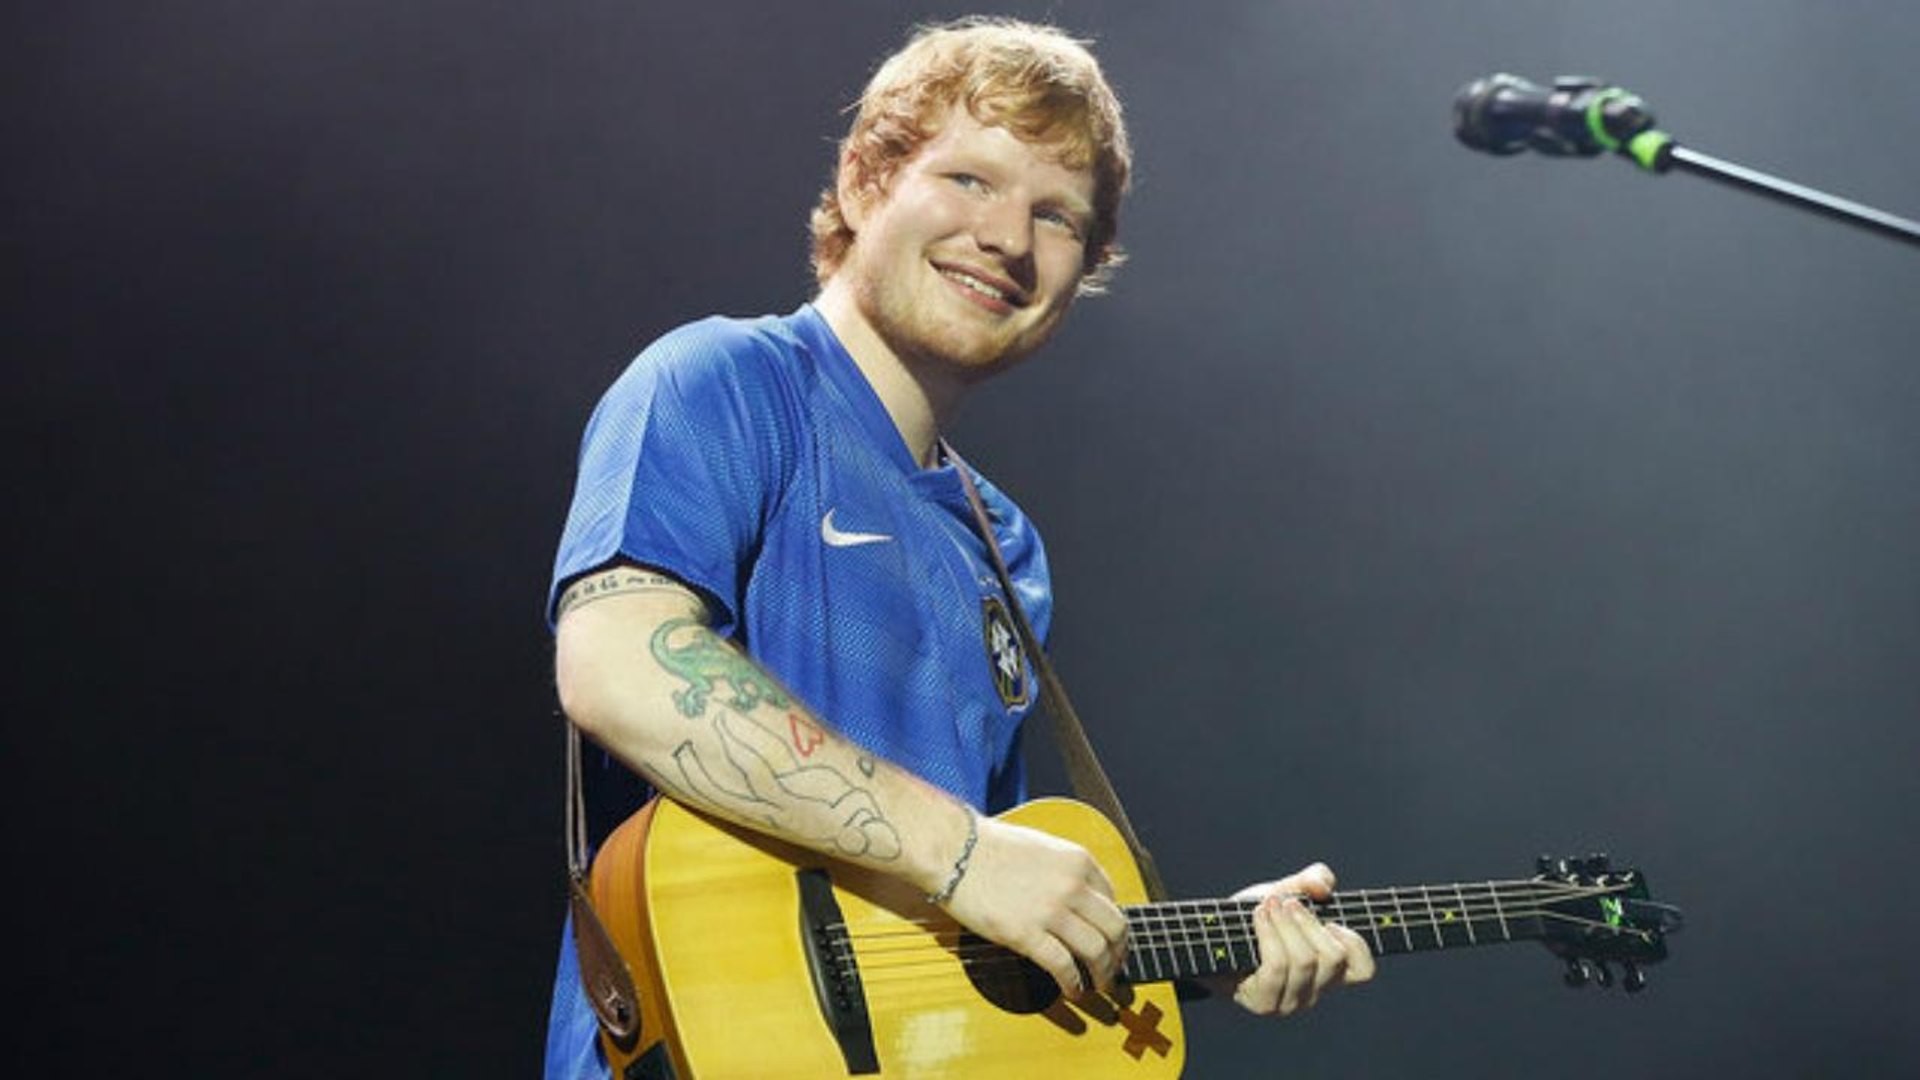 Ed Sheeran's 'Shape of You' Tops Hot 100 for 10th Week | Billboard News